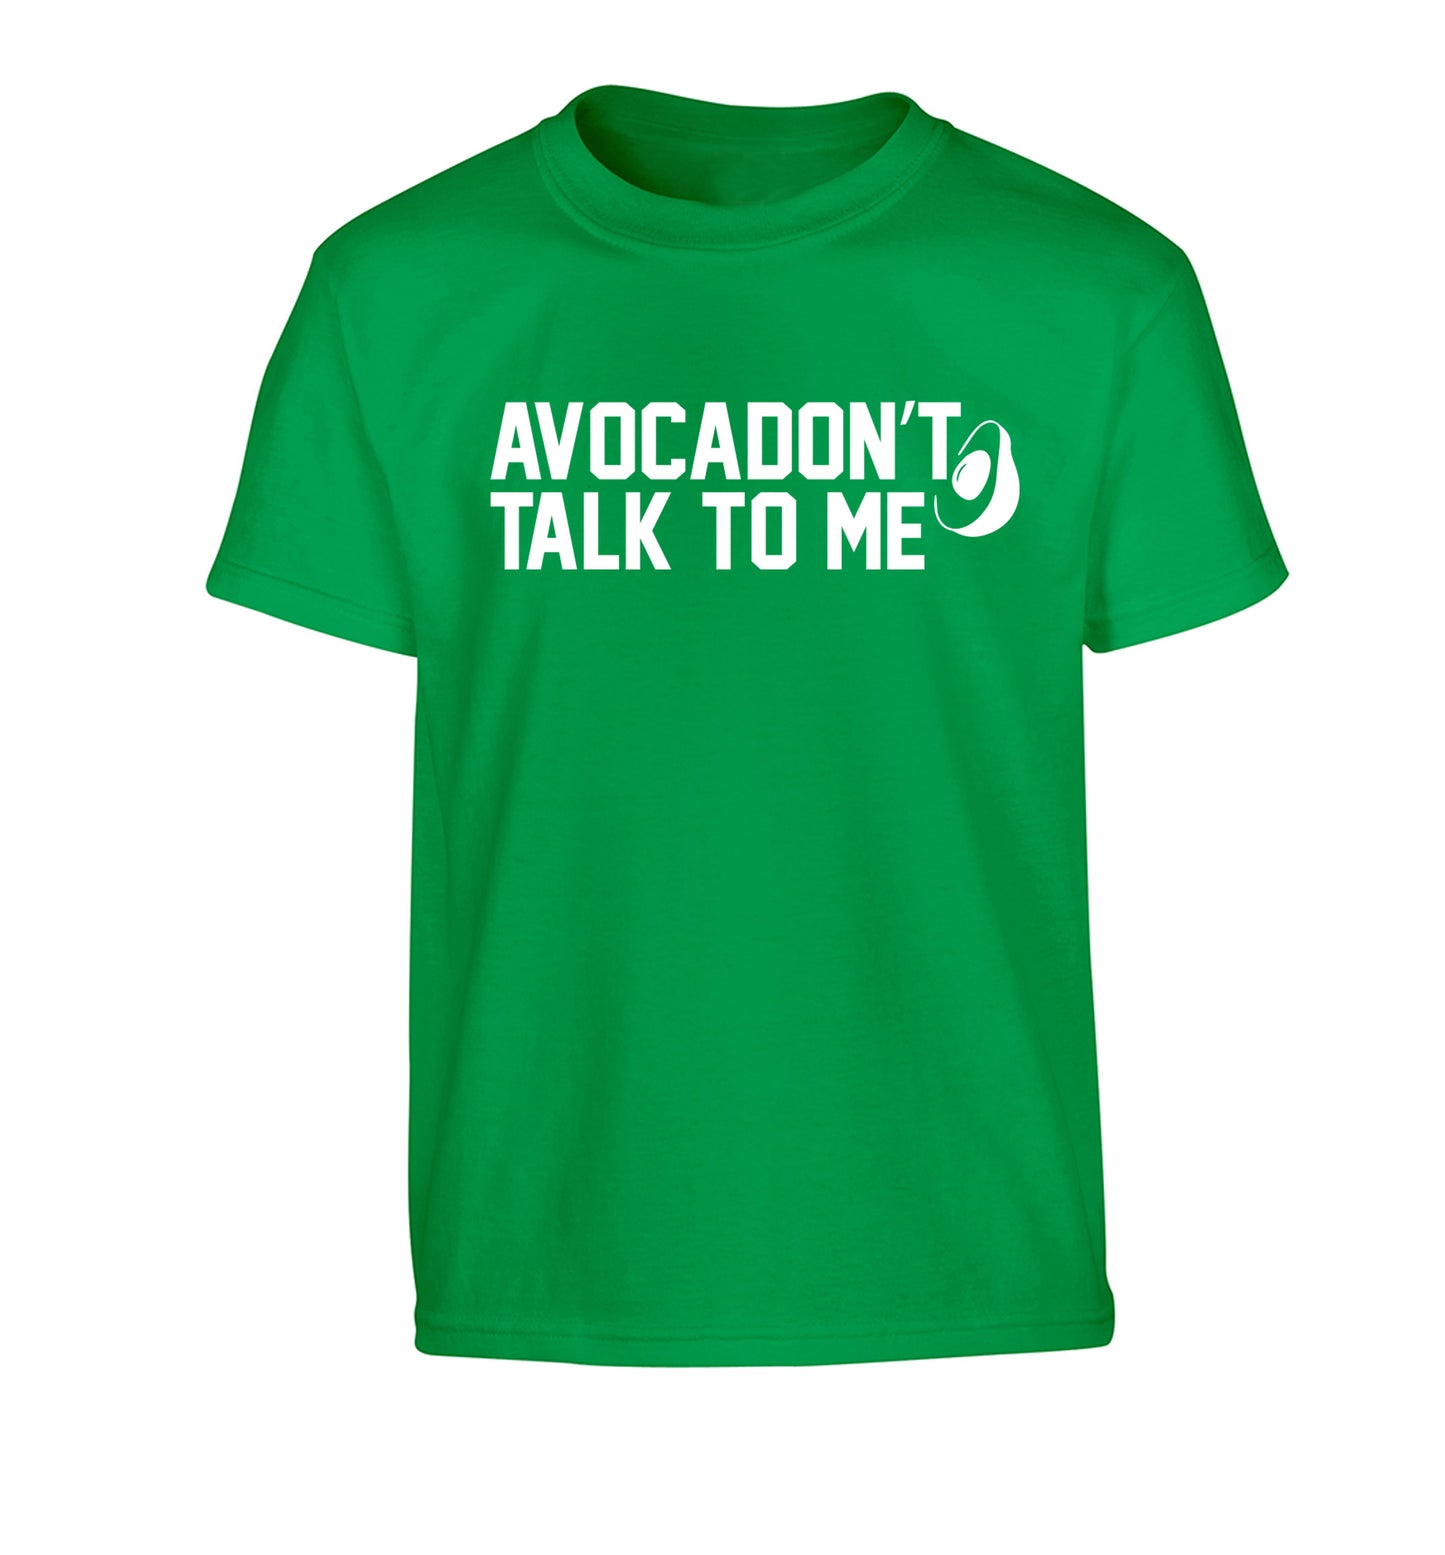 Avocadon't talk to me Children's green Tshirt 12-14 Years